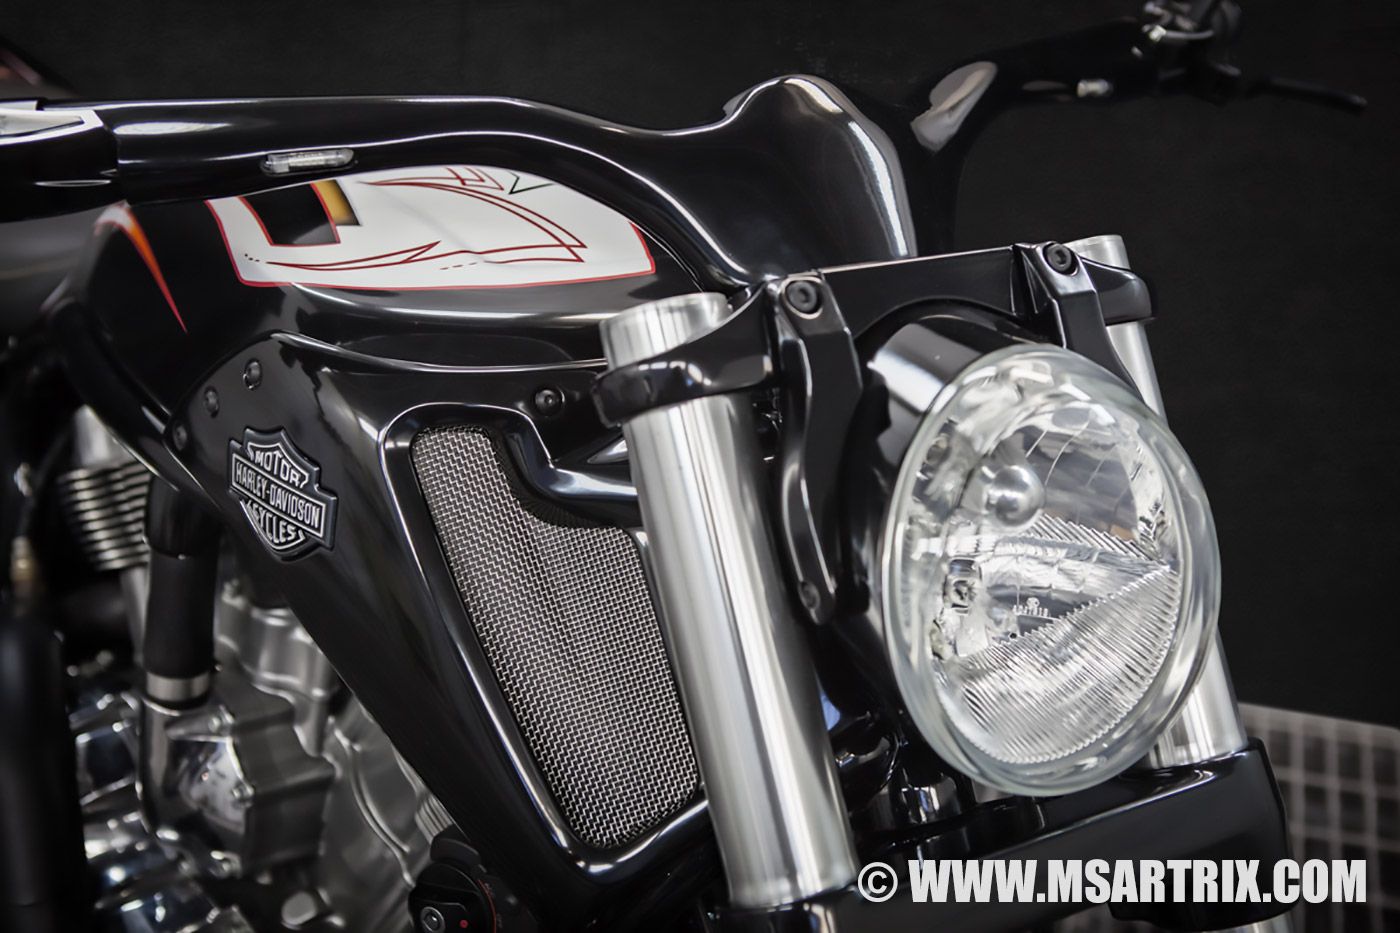 Harley-Davidson V-Rod Discrezione Ms-artrix